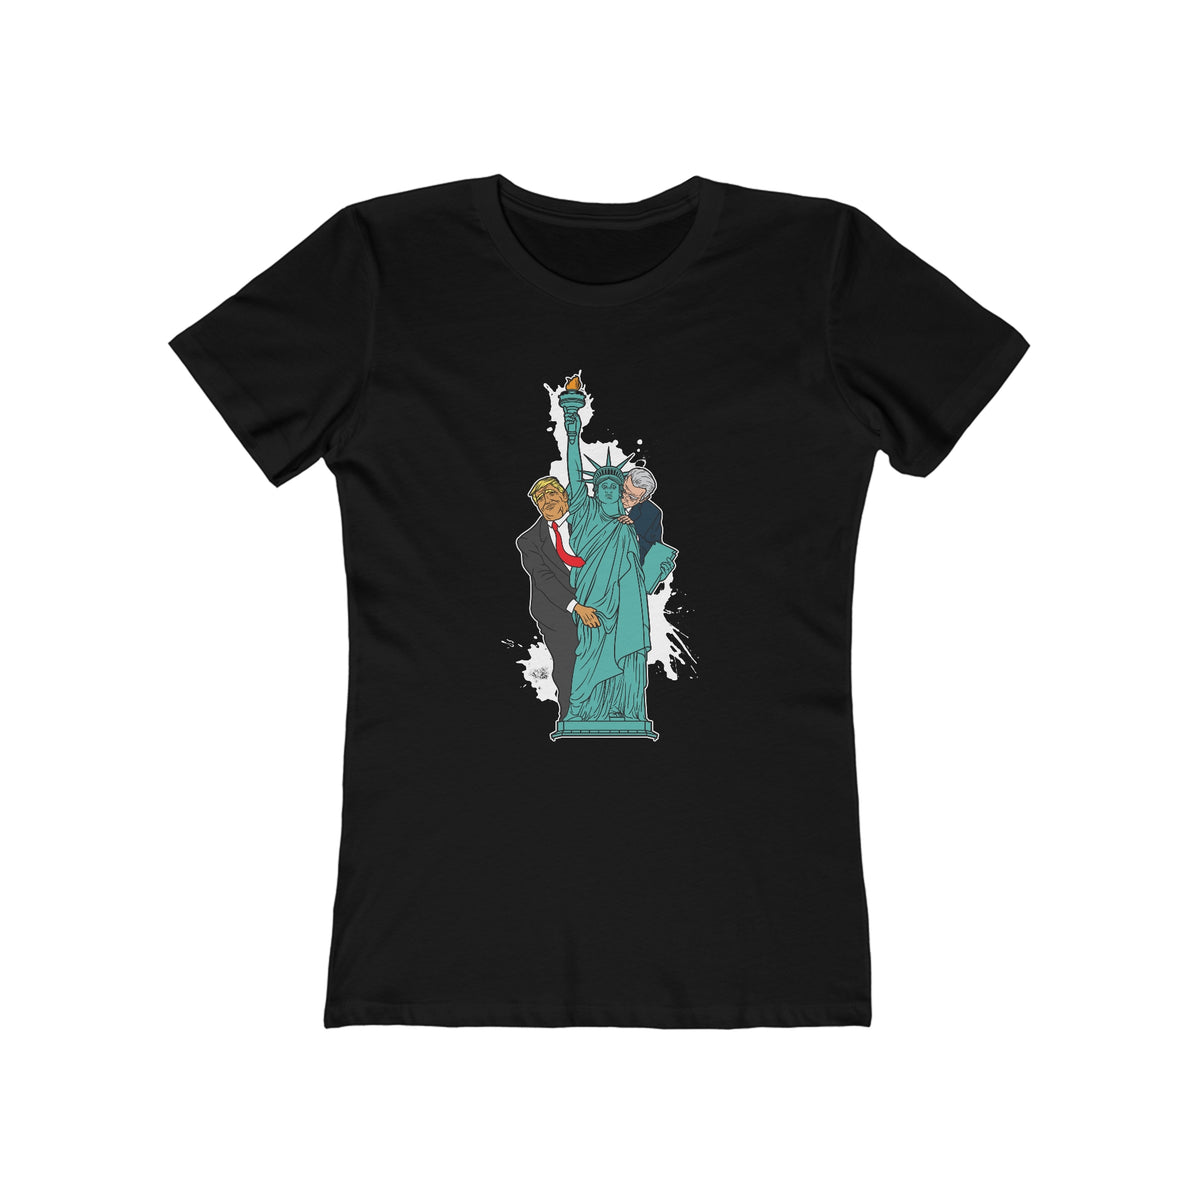 Trump Biden Statue Of Liberty - Menage A Trois  - Women’s T-Shirt